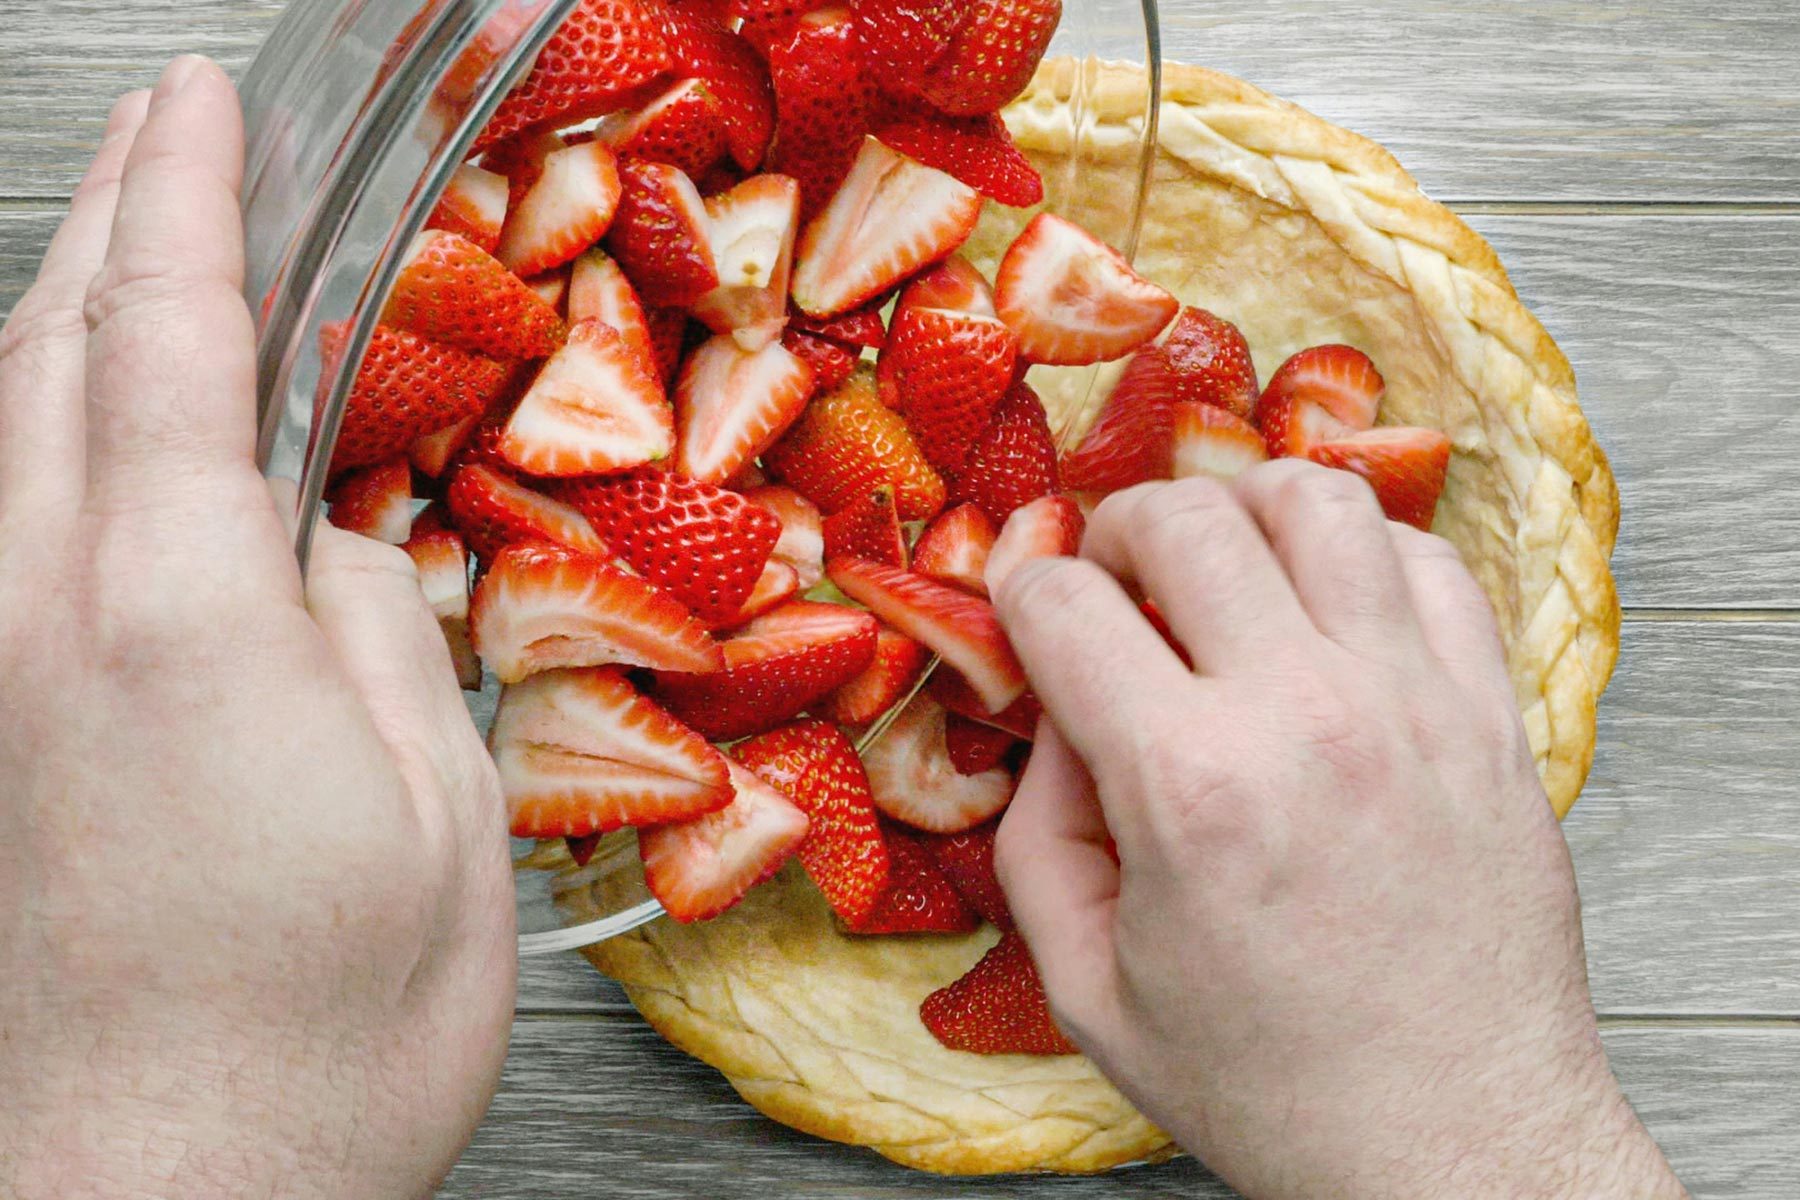 Arranging the strawberries on pie crust